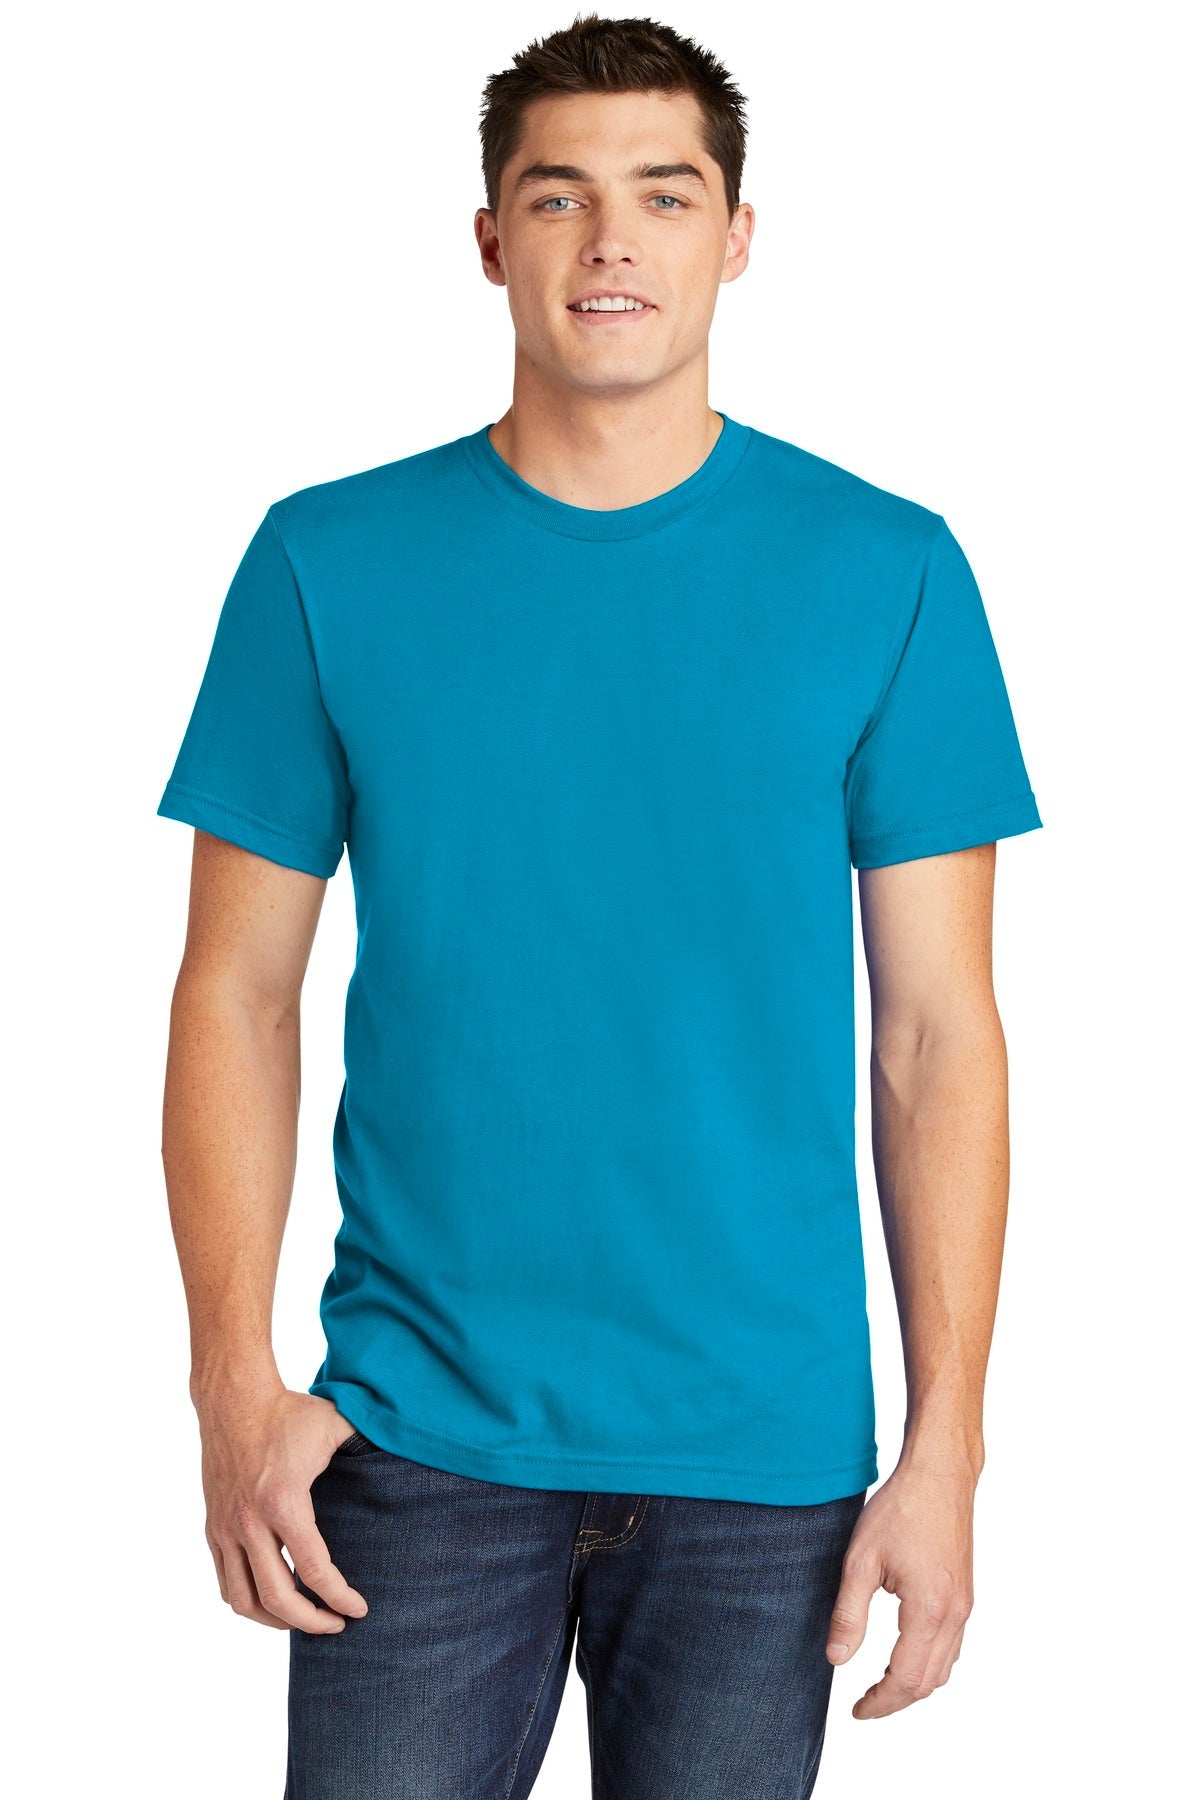 American Apparel ® Fine Jersey T-Shirt. 2001W [Teal] - DFW Impression